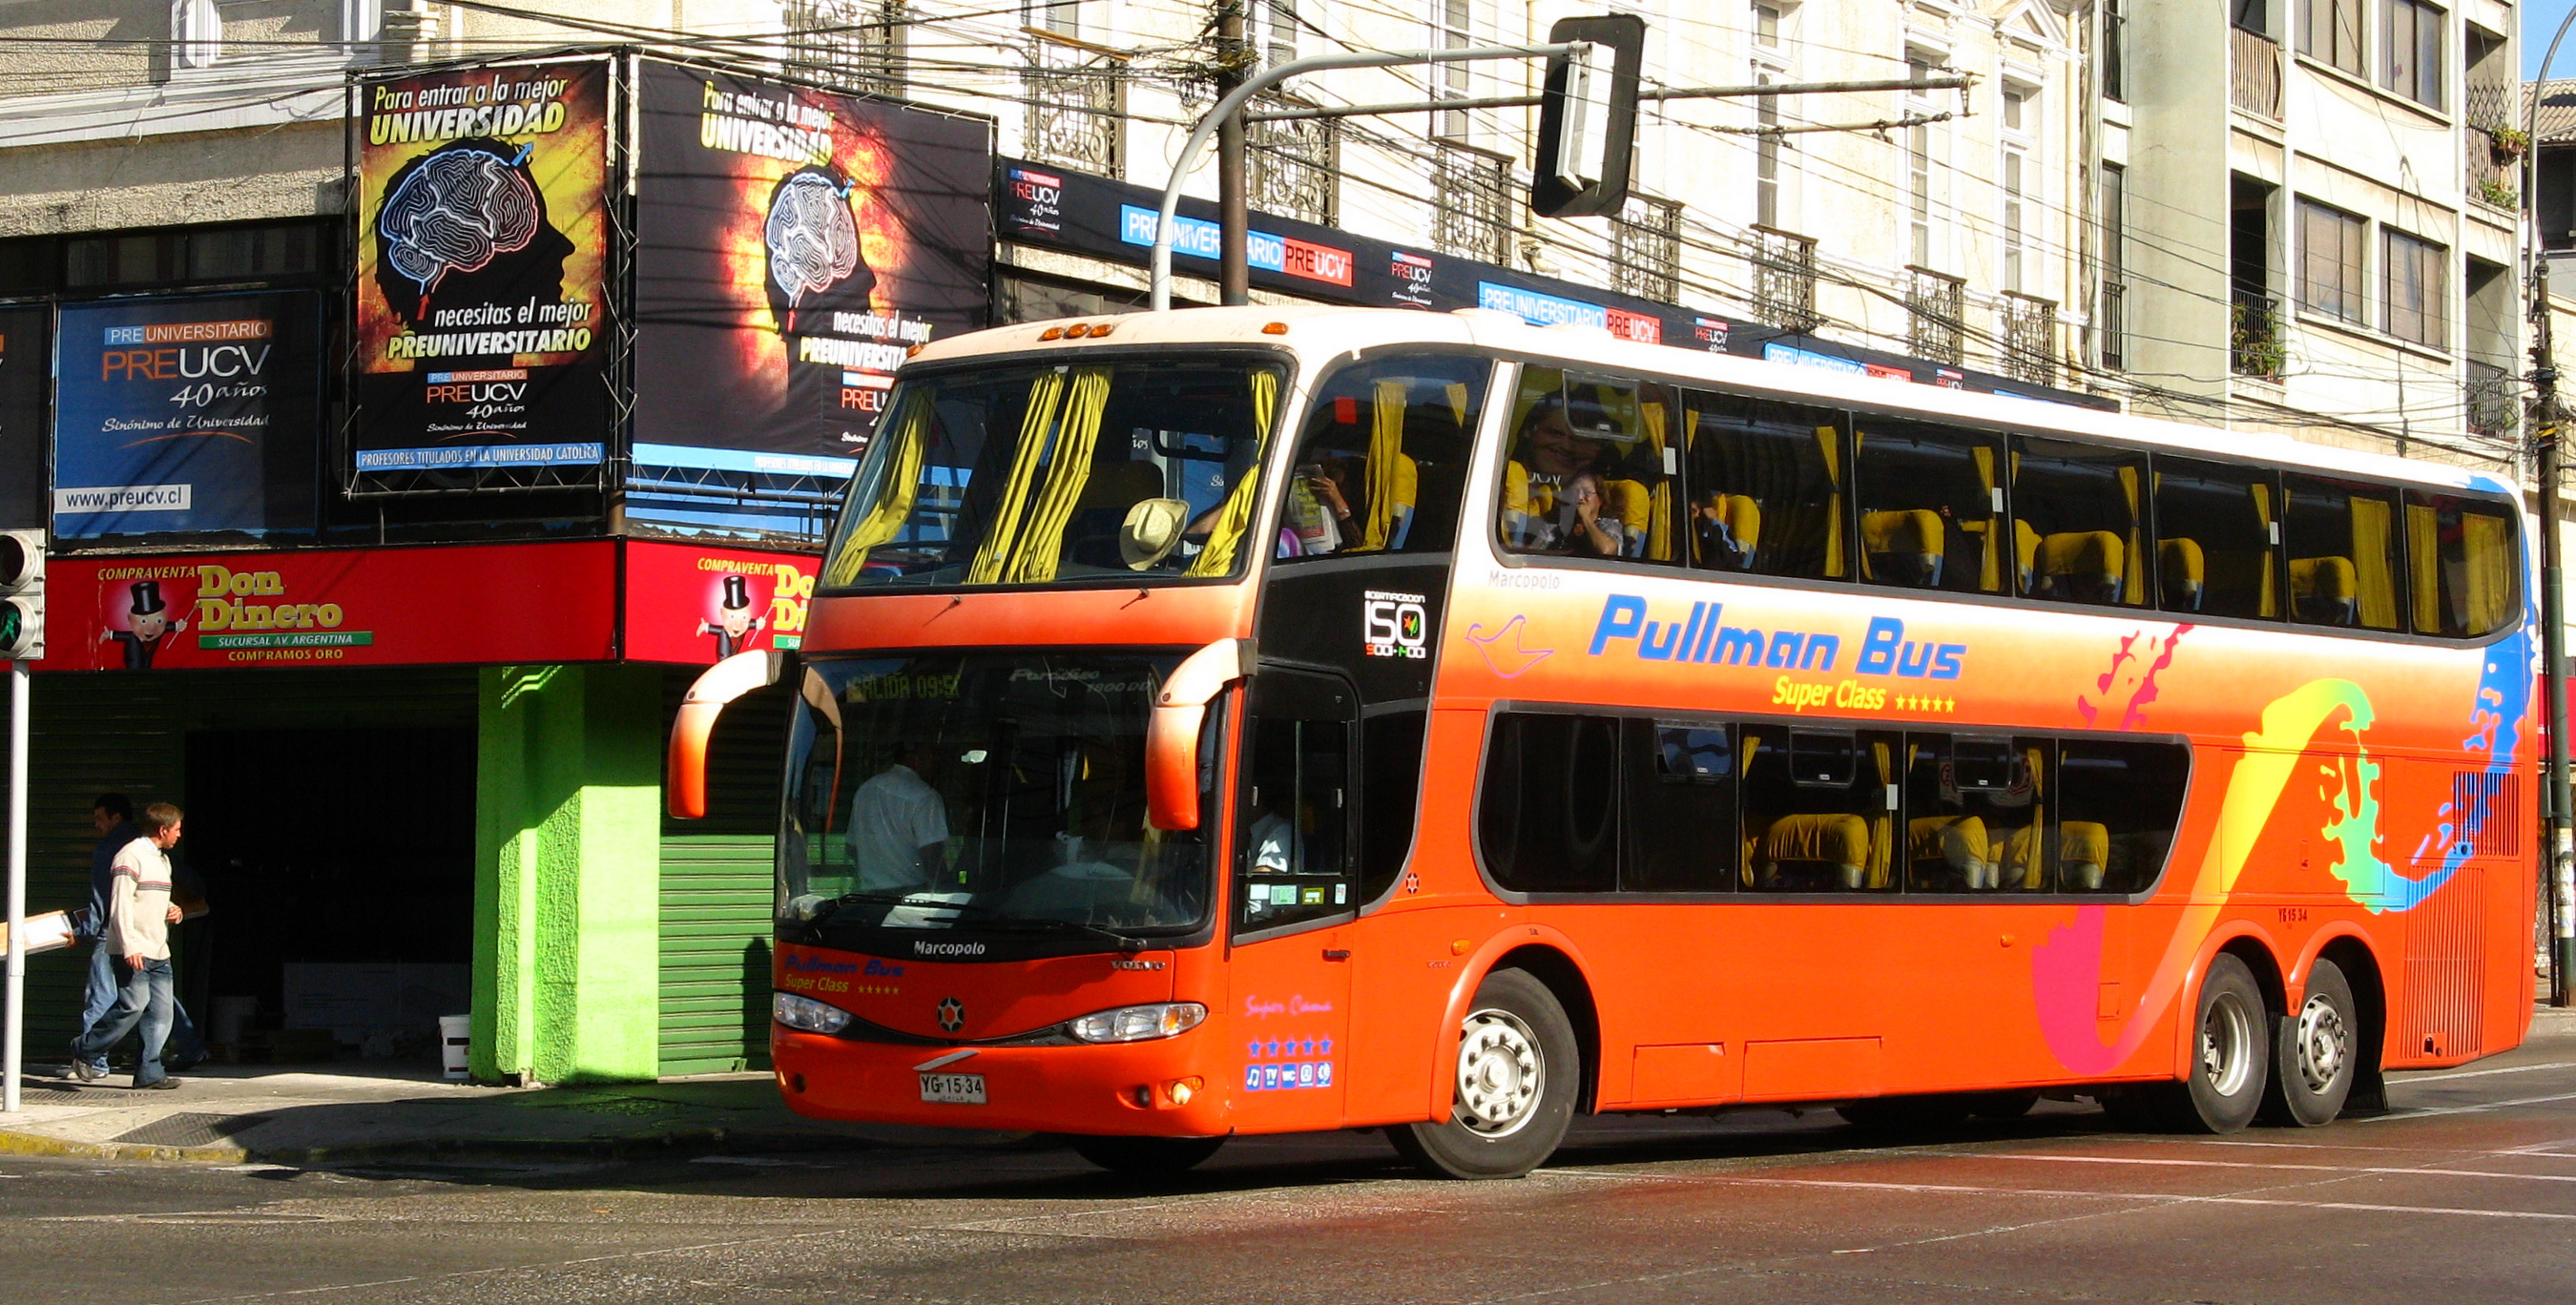 Pullman Bus